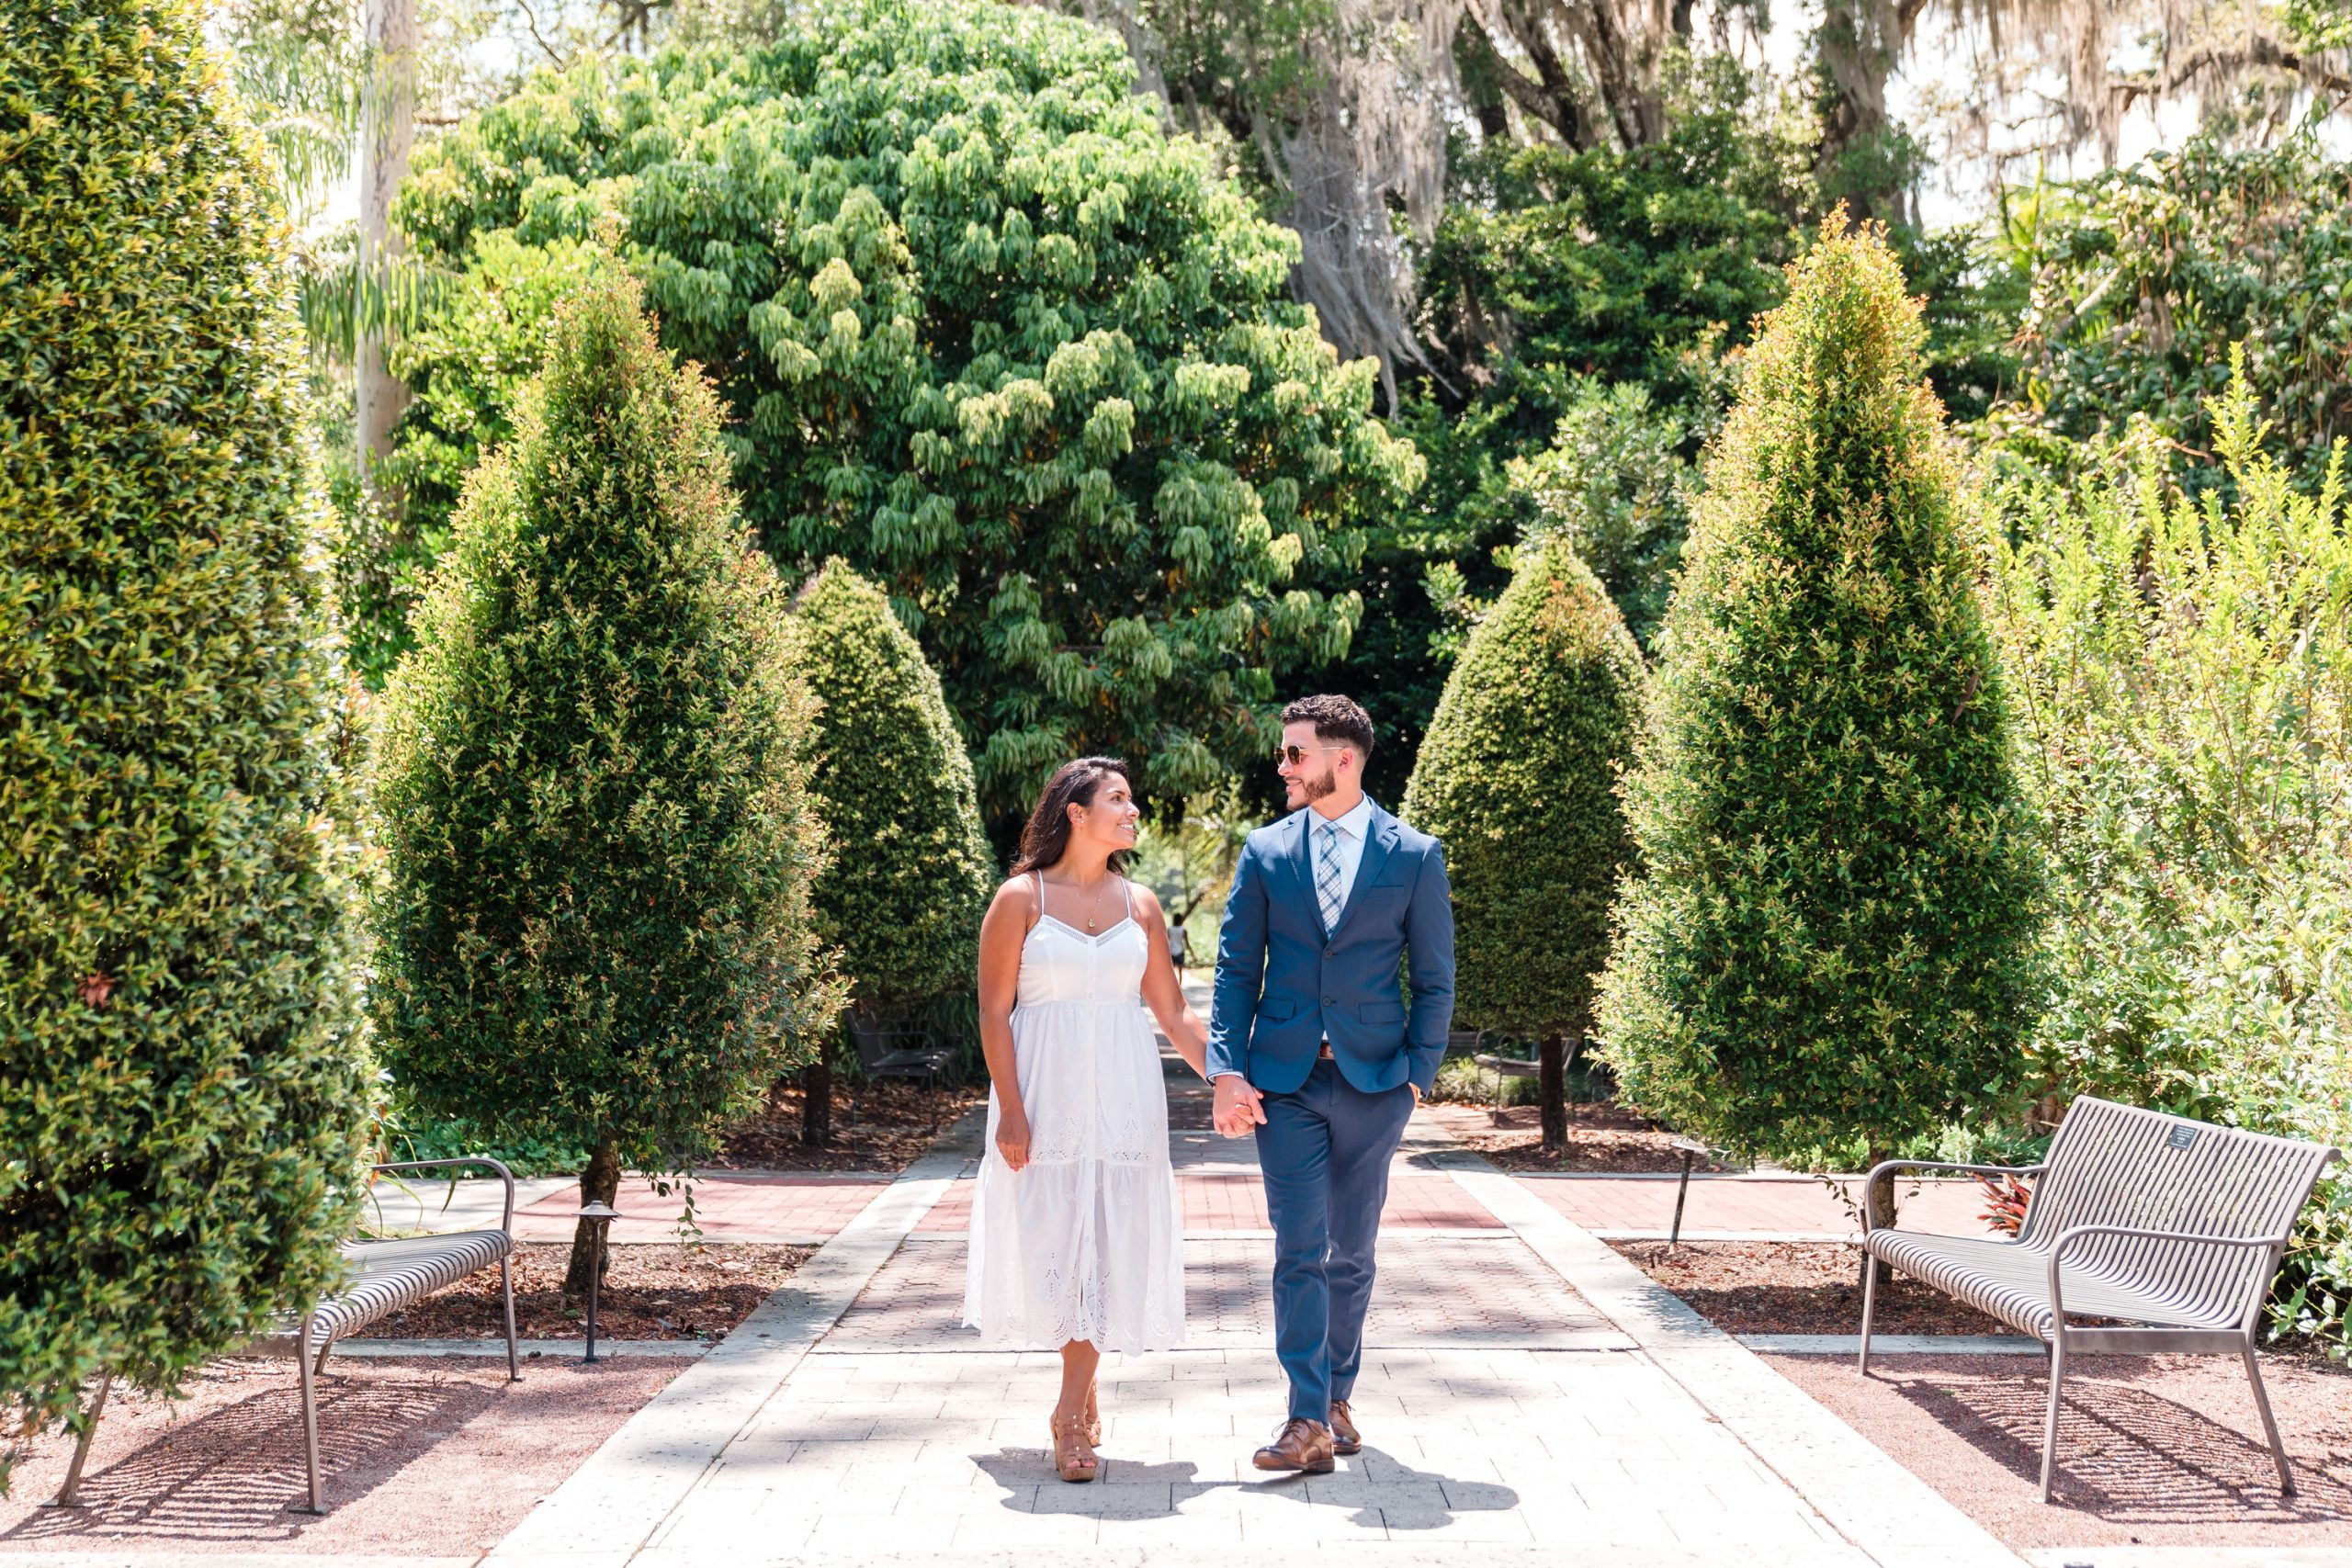 Engagement photo shoot at Leu Gardens in Orlando